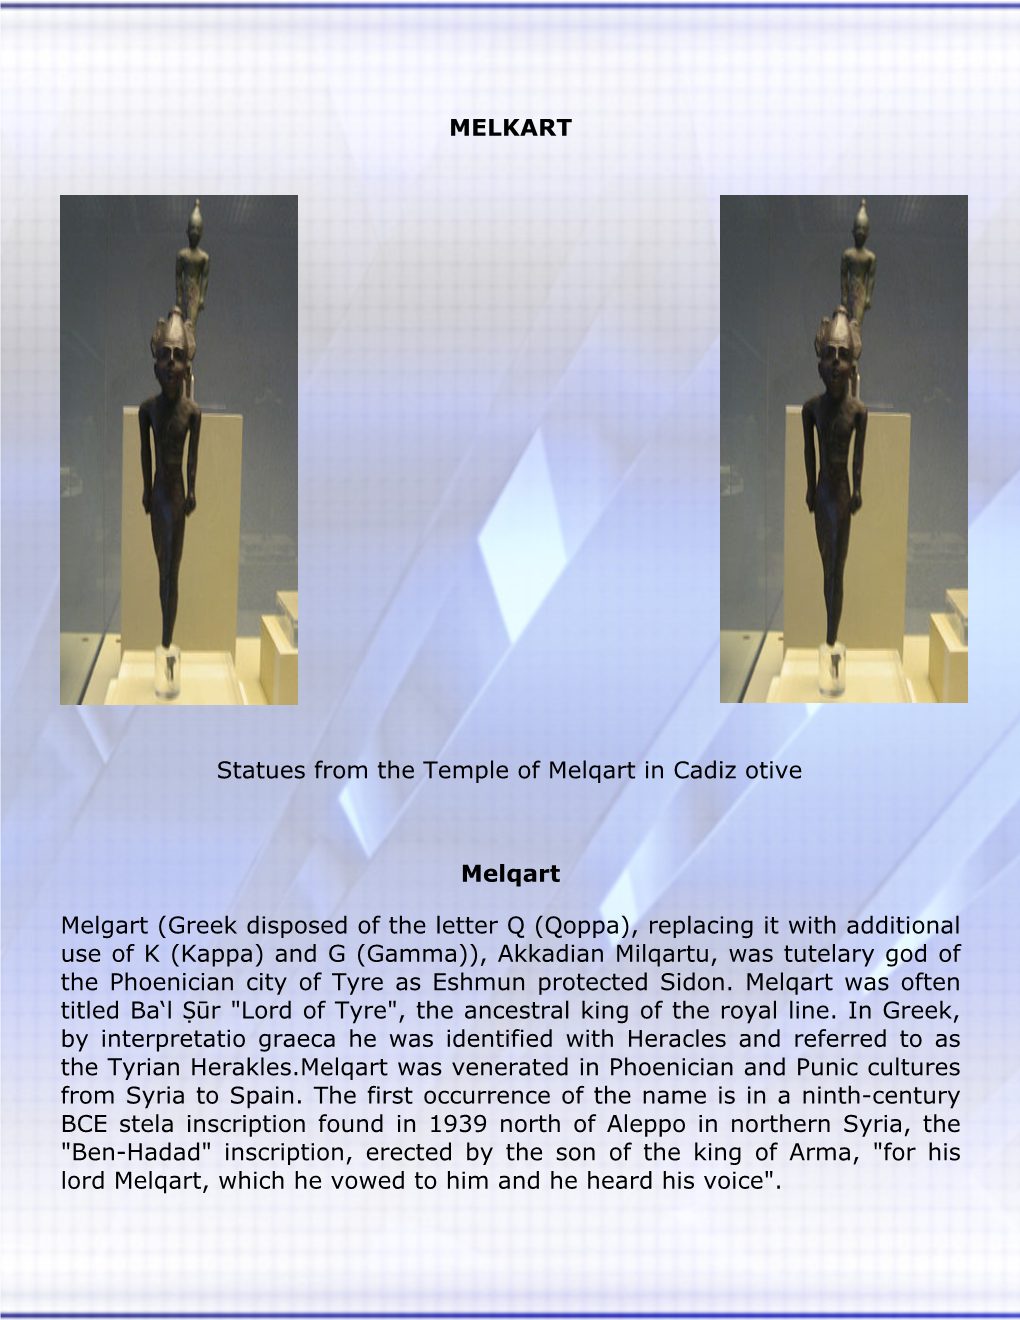 MELKART Statues from the Temple of Melqart in Cadiz Otive